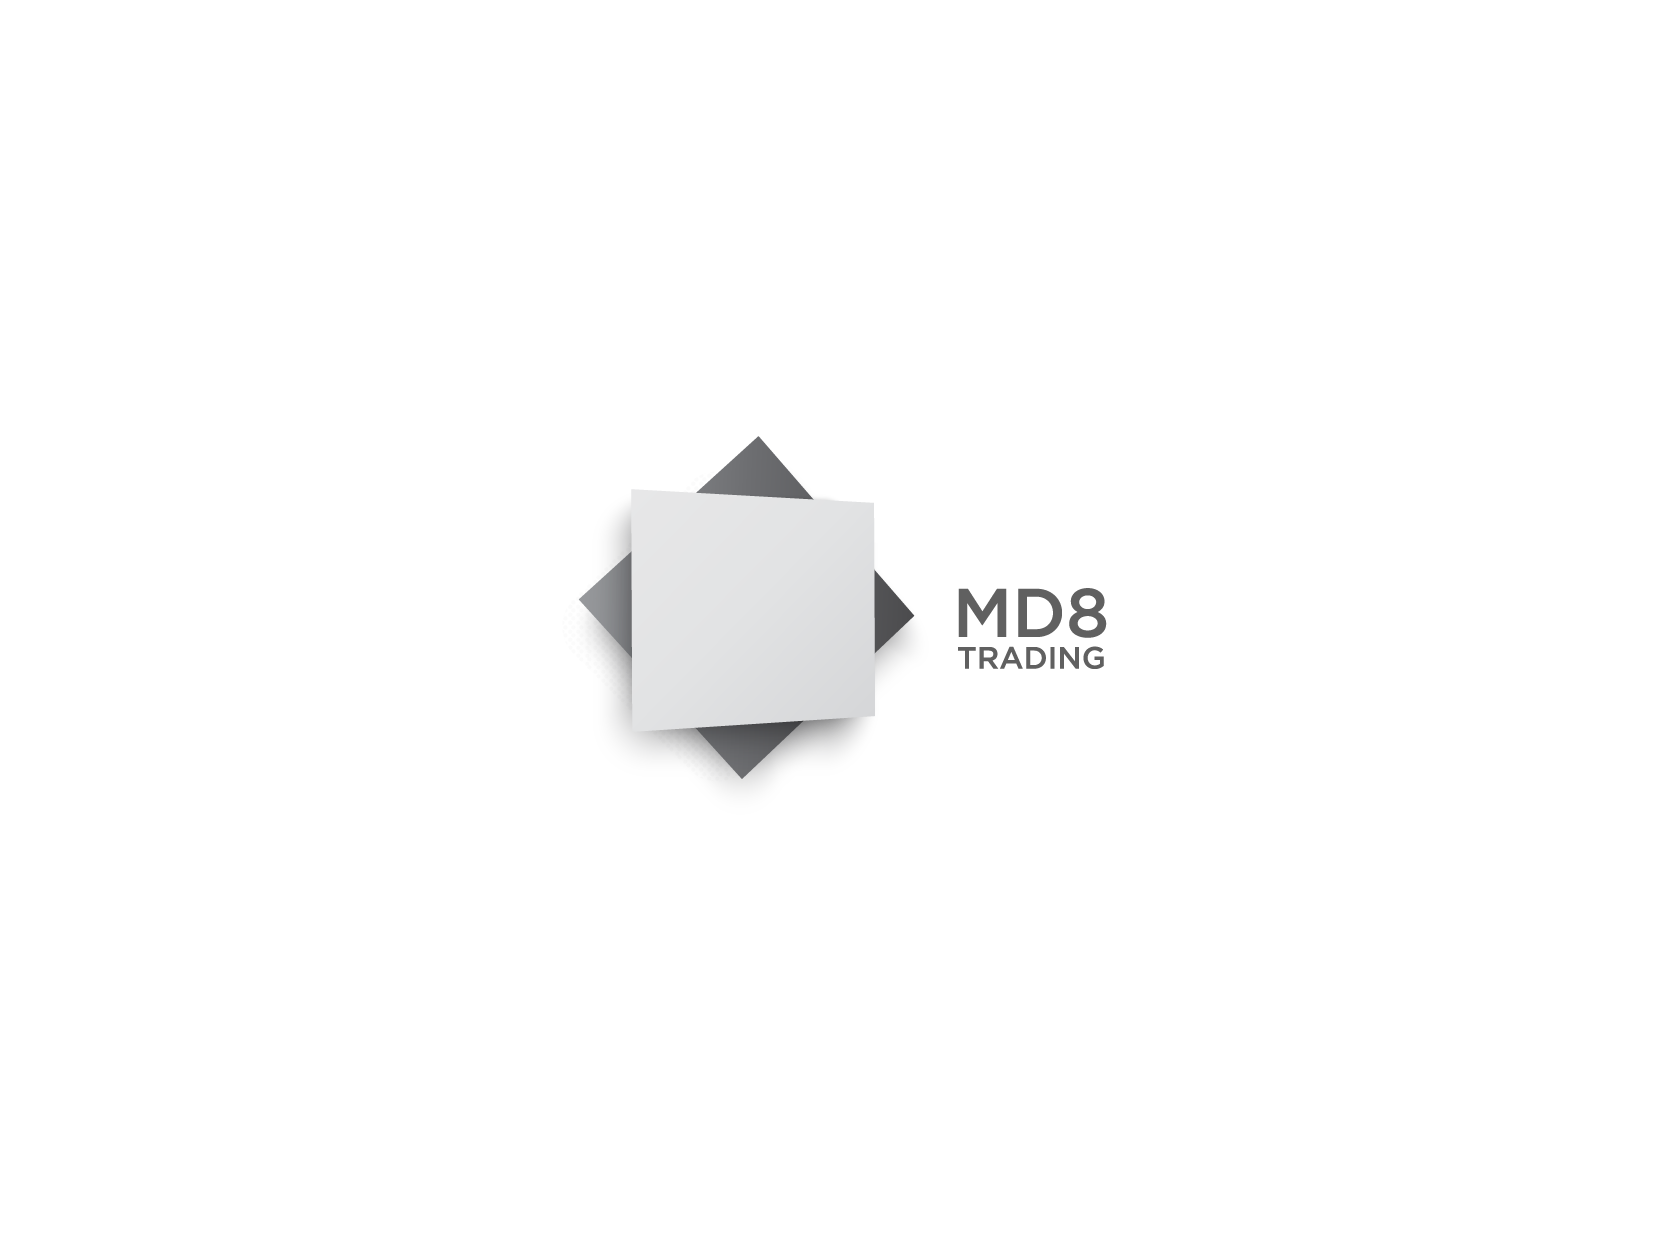  MD8 Trading Logo Design